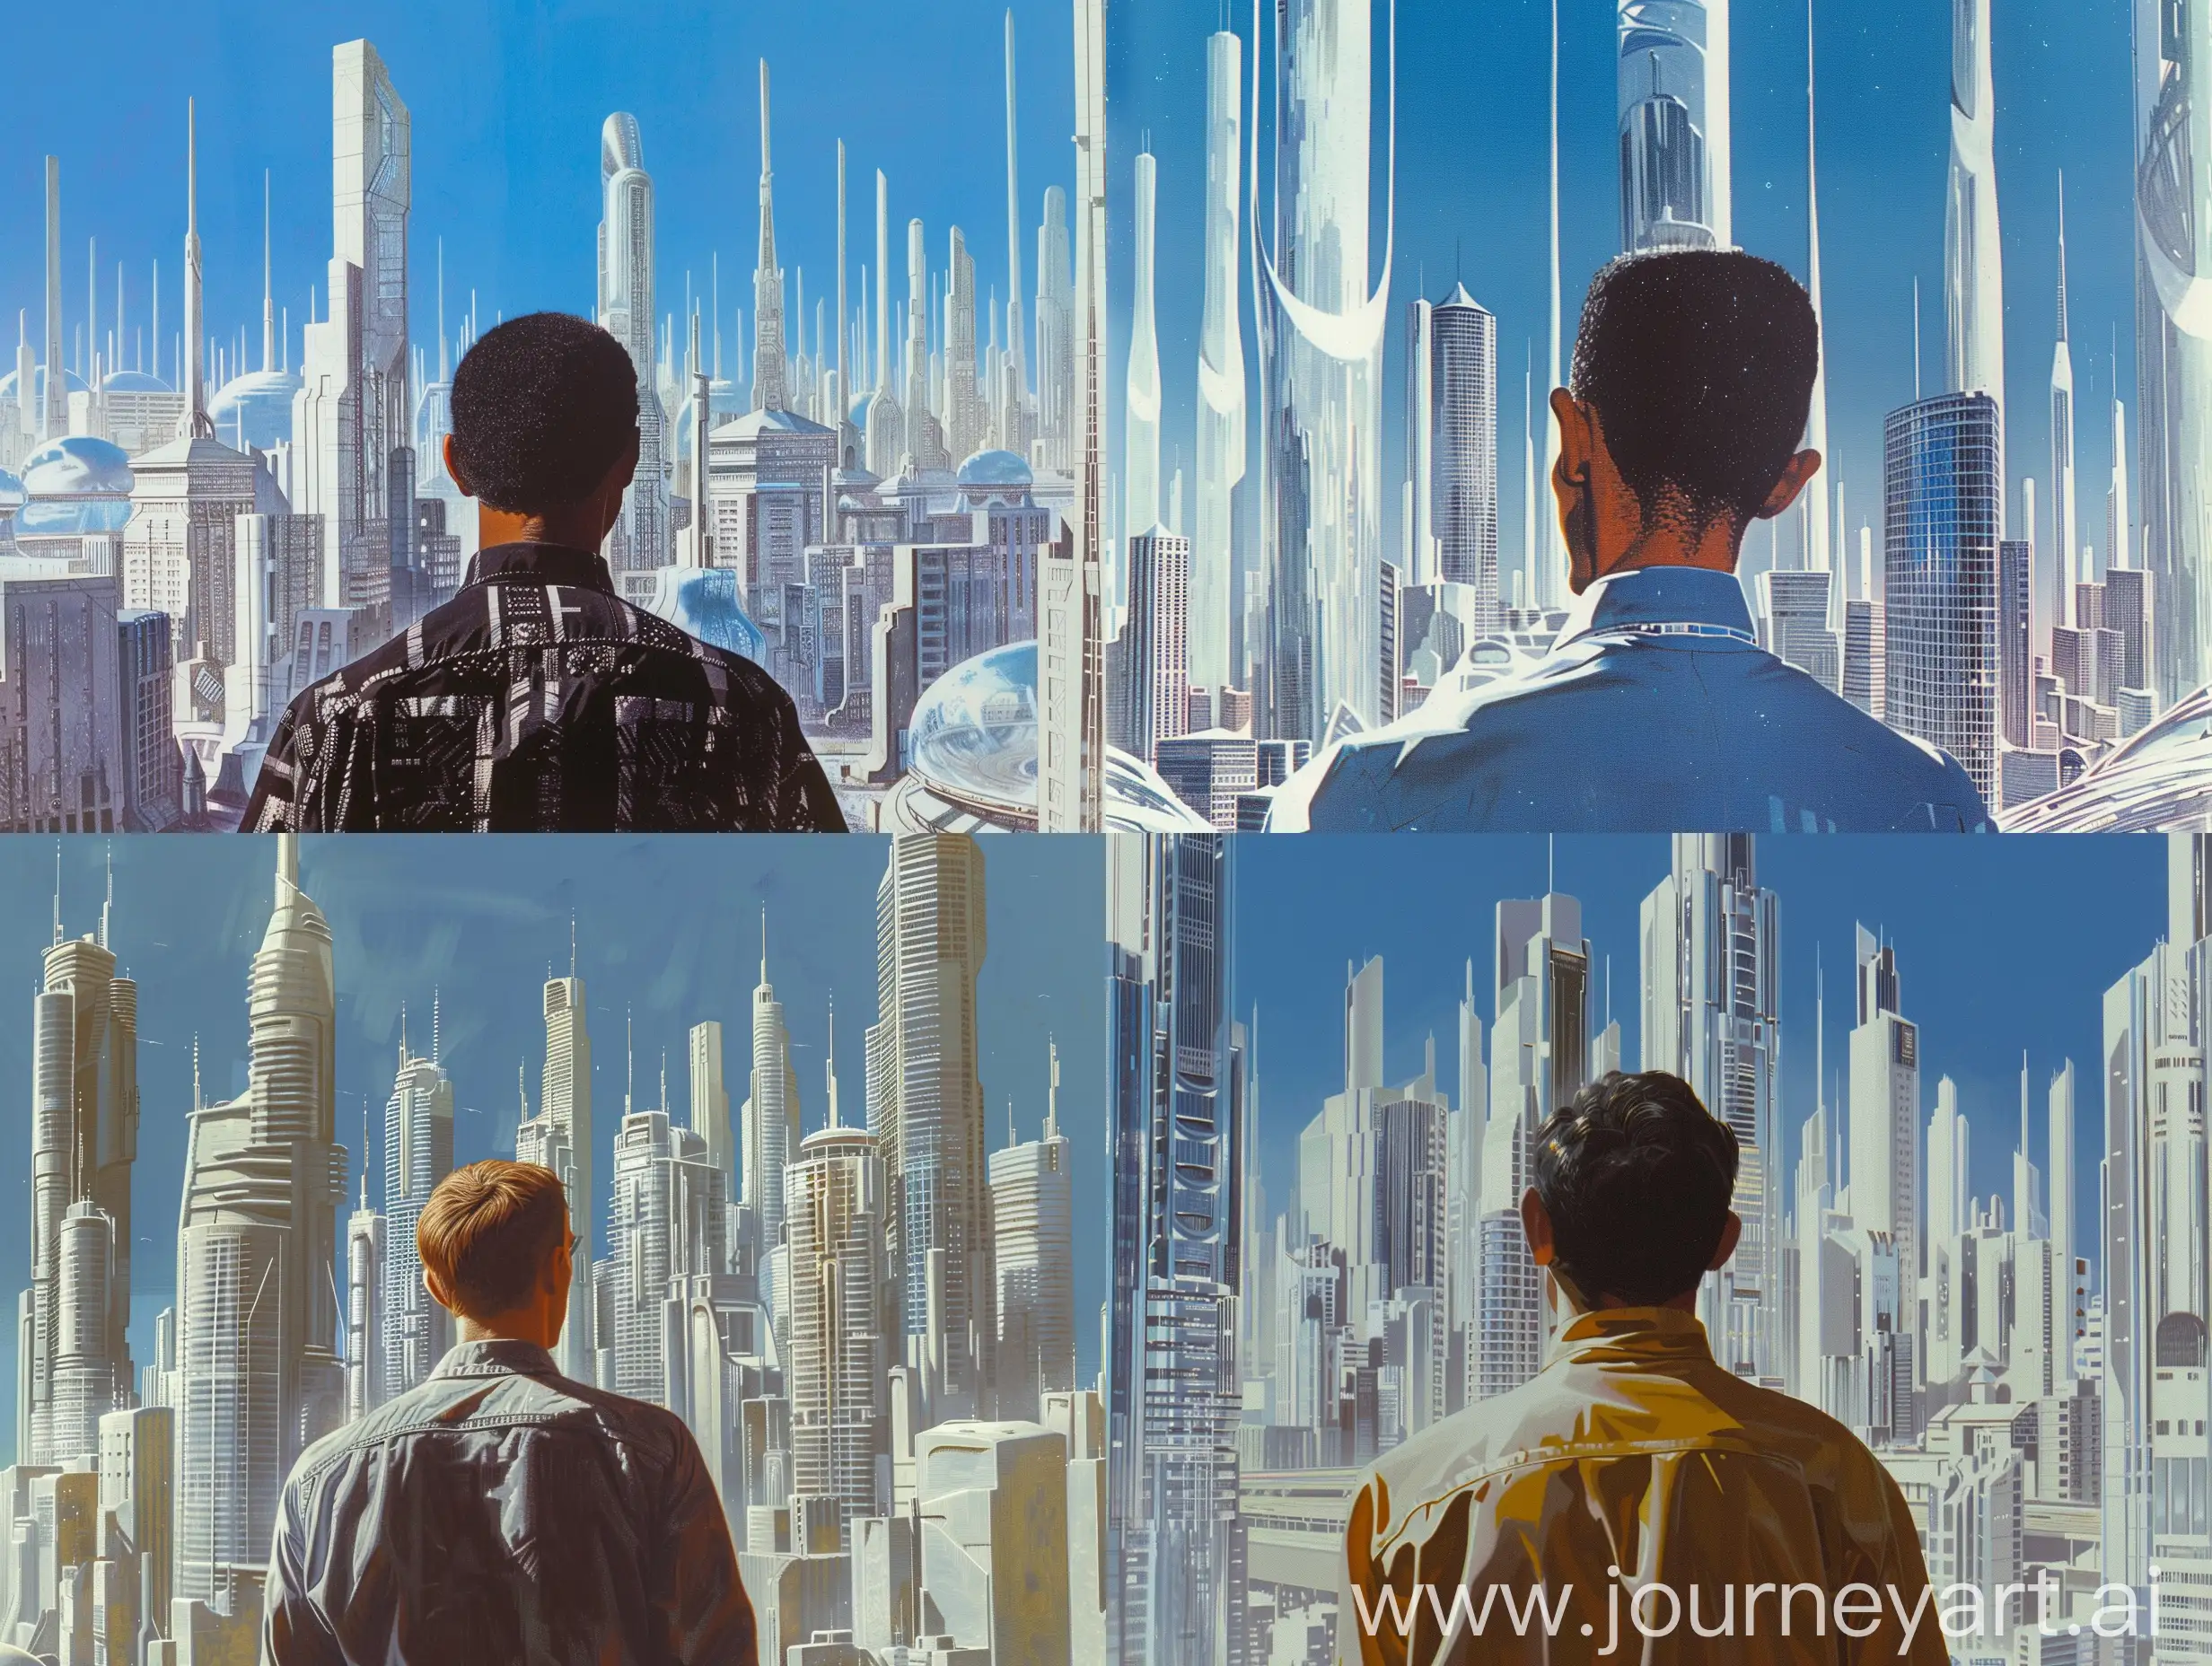 Resolute-Man-Gazing-at-Futuristic-City-Skyline-in-1970s-Retro-SciFi-Art-Style